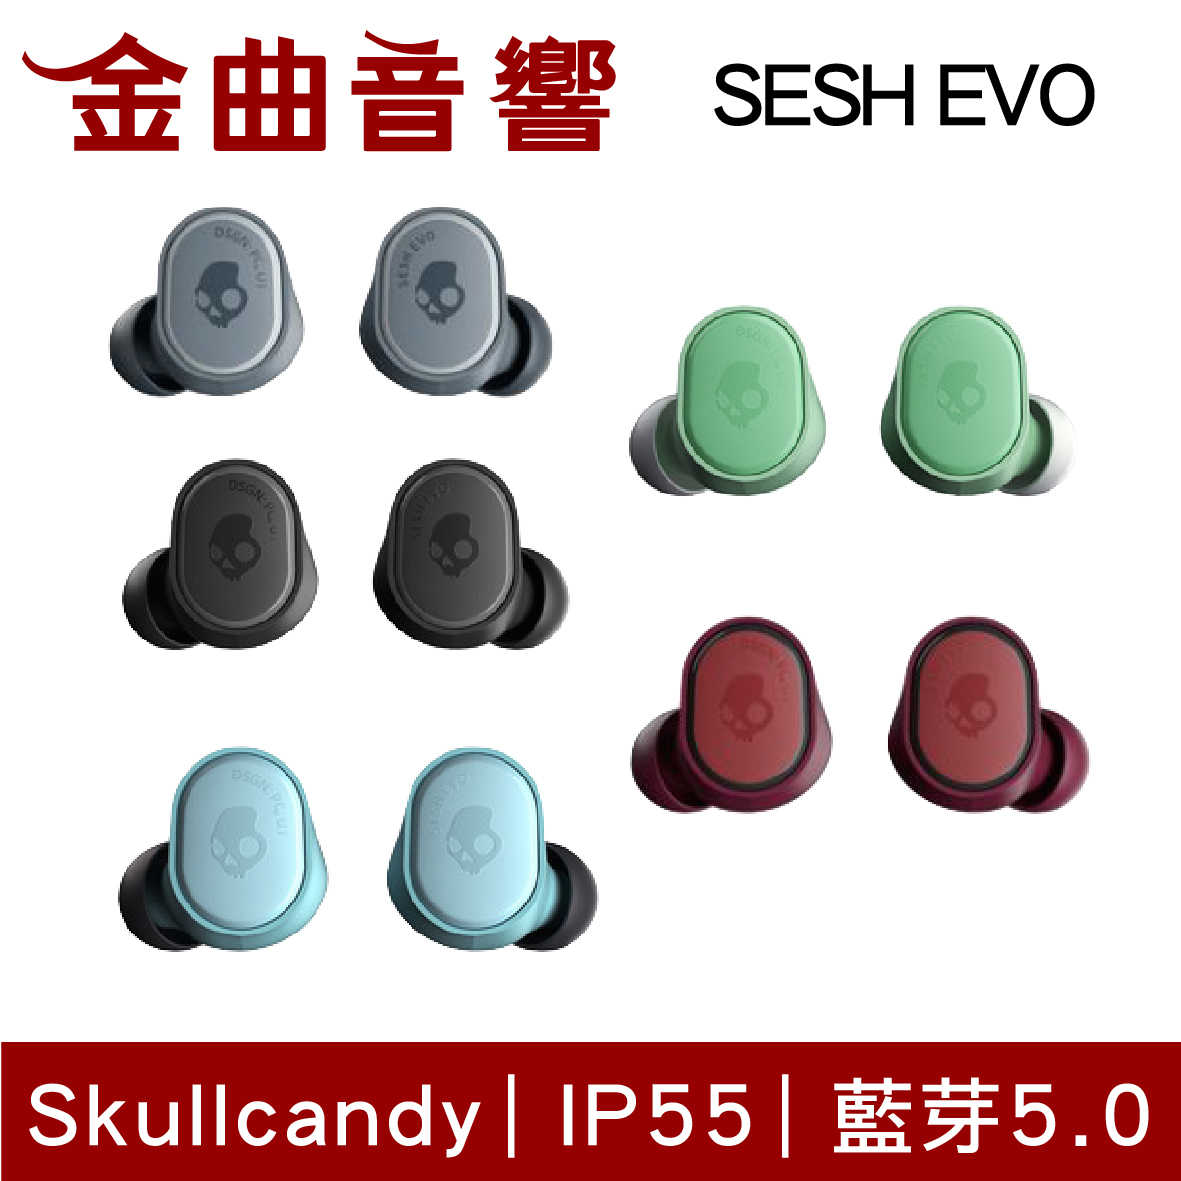 Skullcandy 骷髏糖 SESH EVO 藍 藍芽5.0 支援單耳 IP55 真無線 藍牙 耳機 | 金曲音響